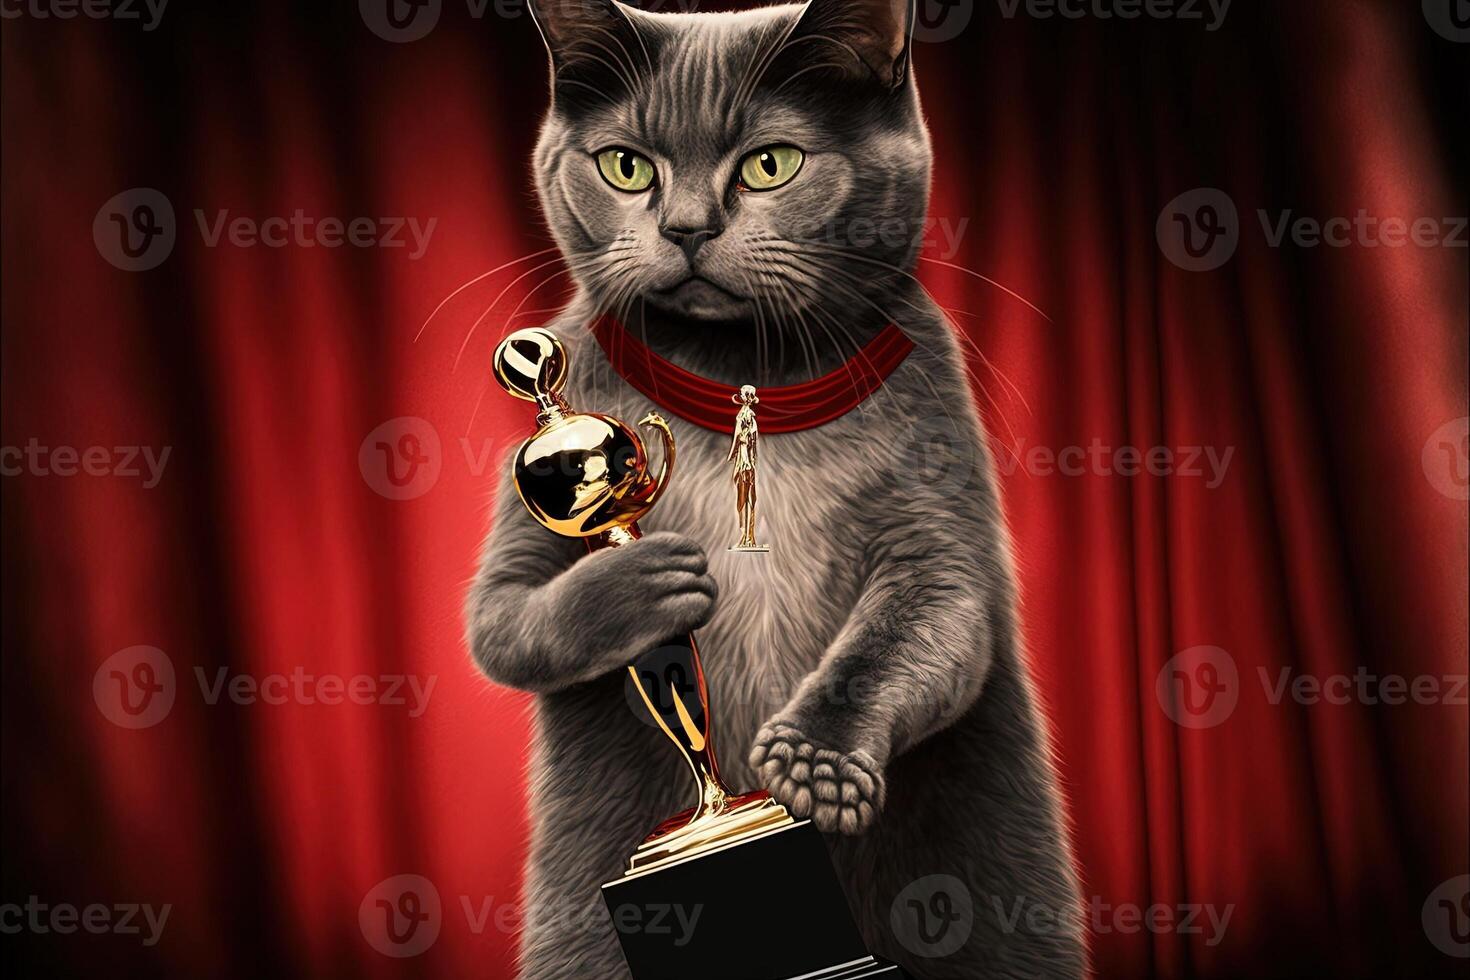 cat on red carpet winning oscar award illustration photo